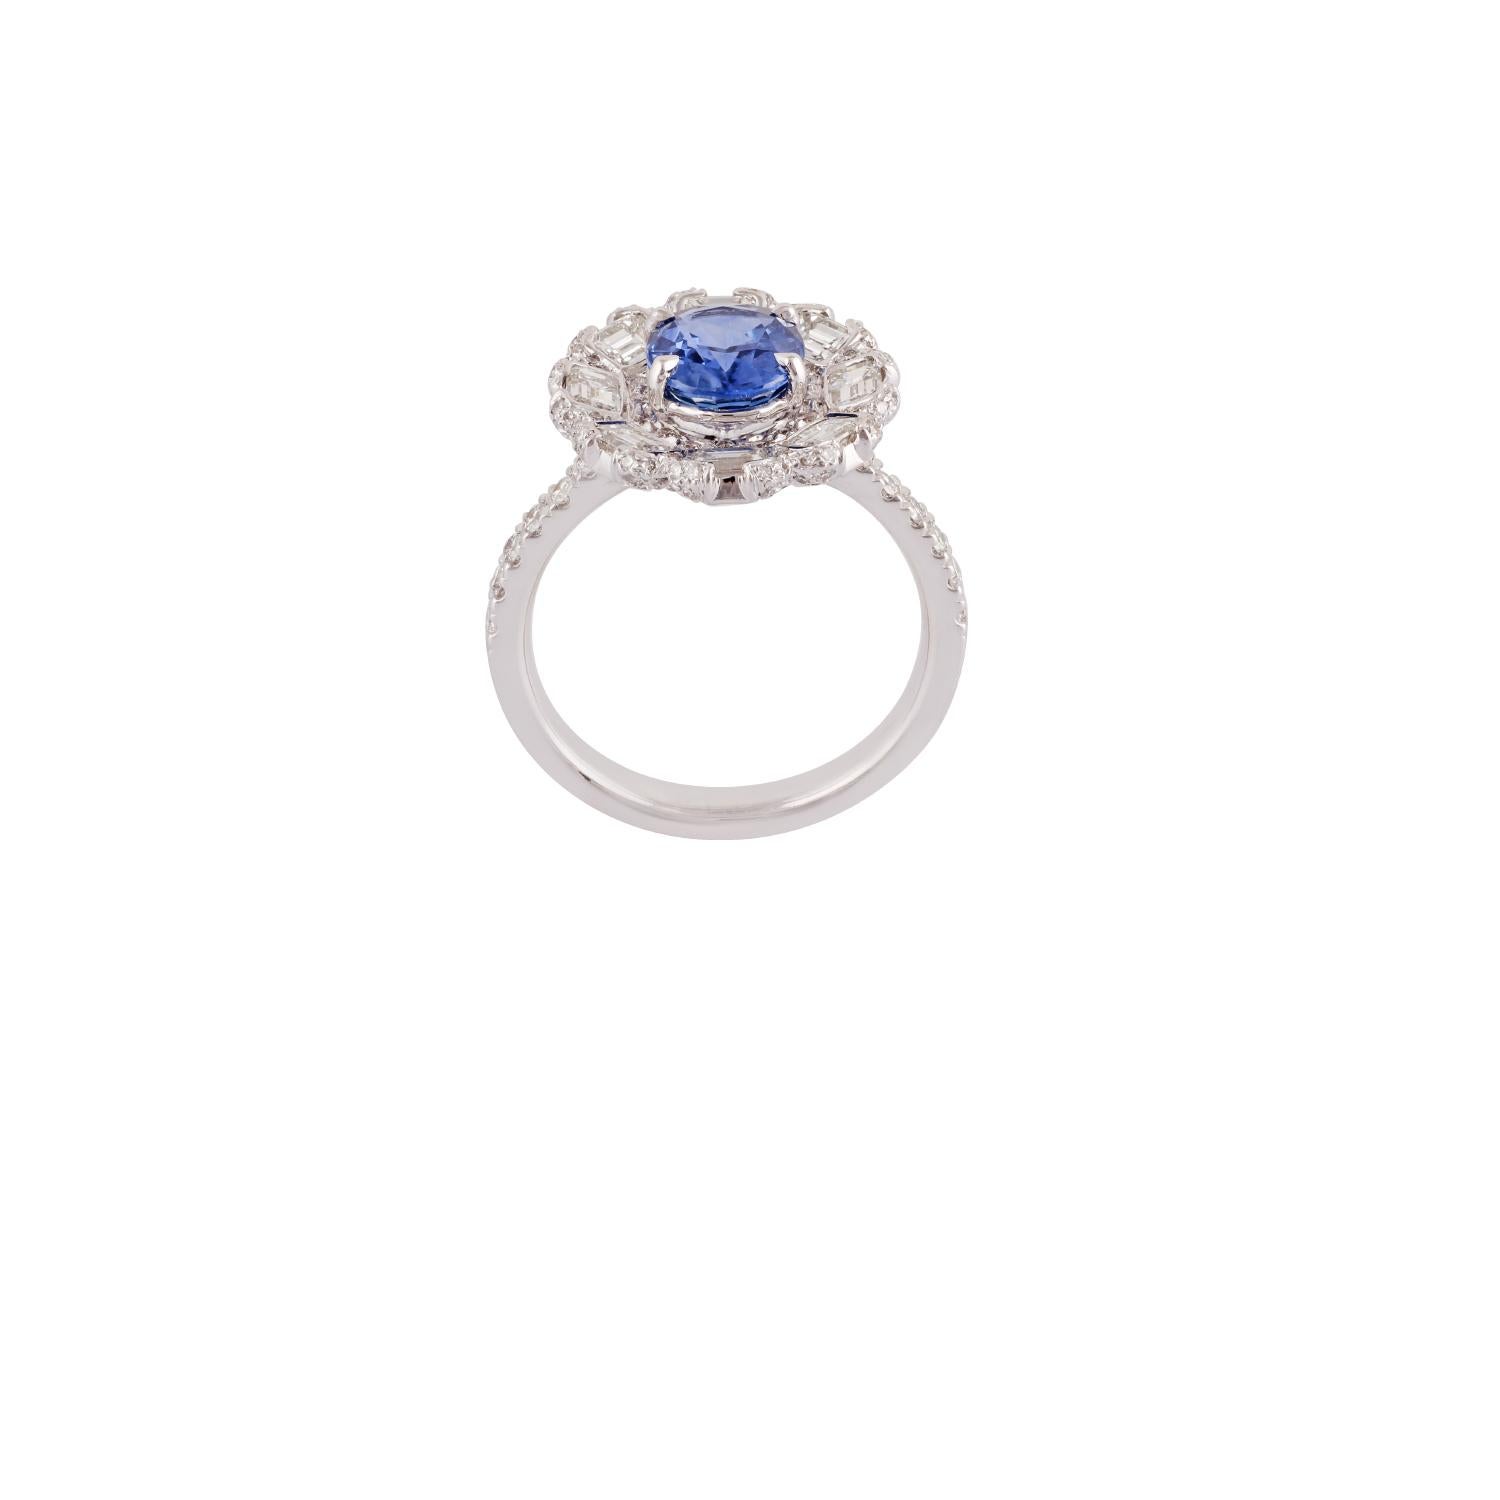 Blue Sapphire - 1.83 Carats
Emerald Cut Diamond - 1.13 Carats
Round Cut Diamond -0.64 Carat
18KT White Gold - 5.10 Grams